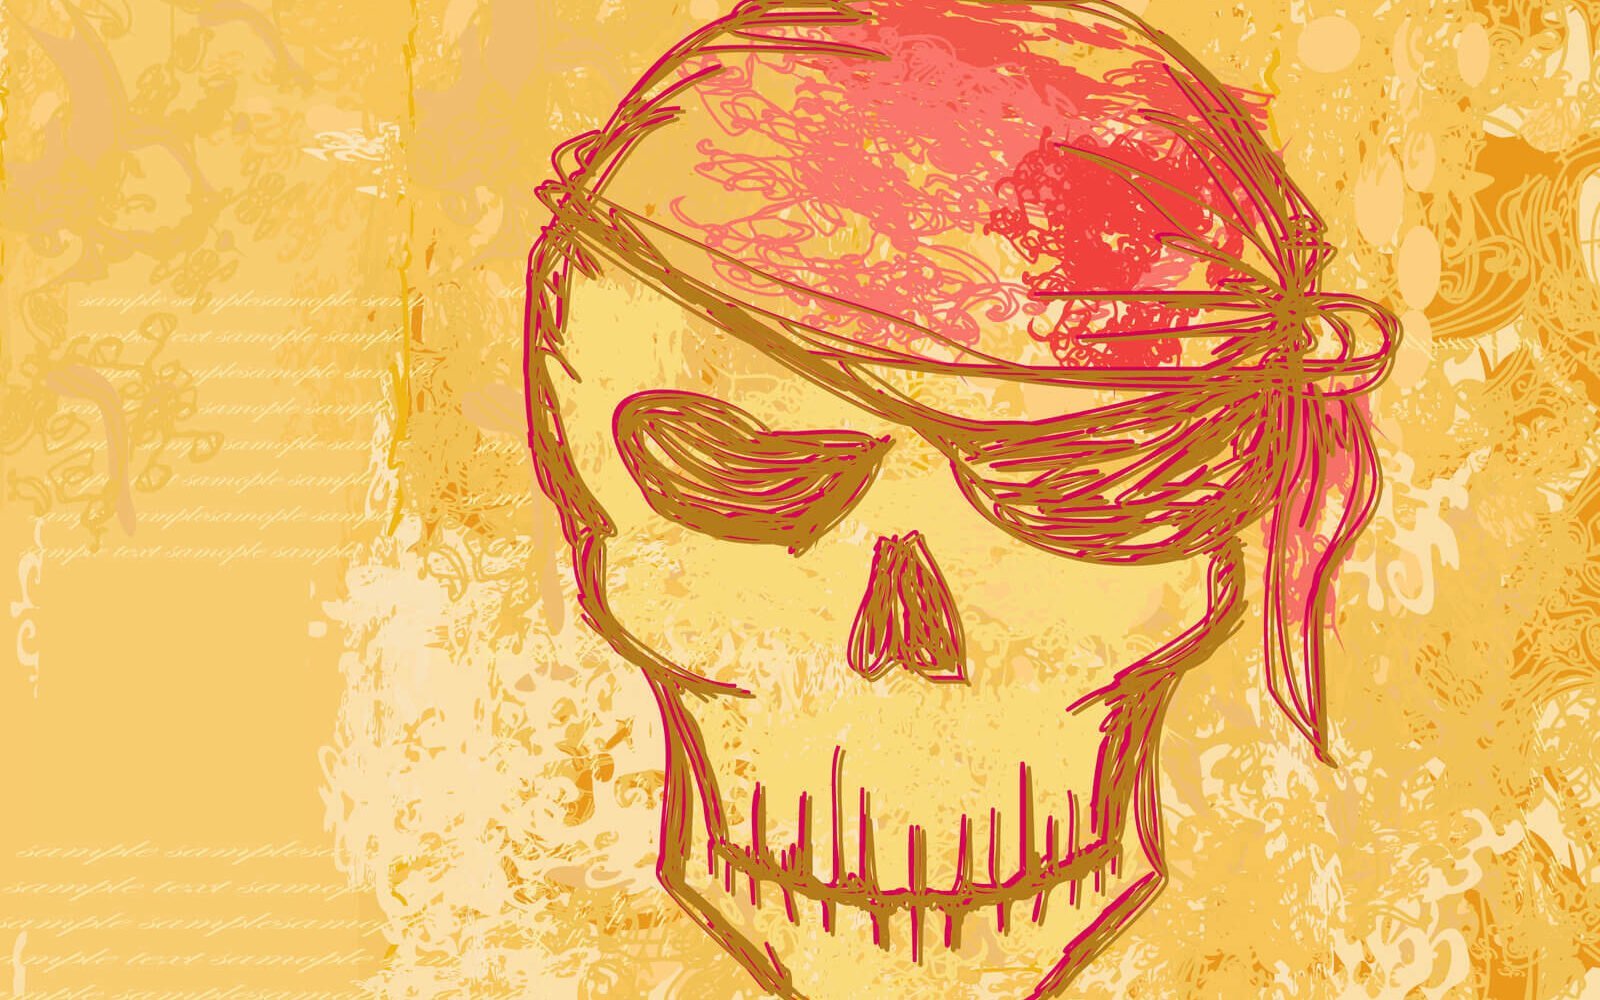 Pirate skull vector | price 1 credit usd $1.